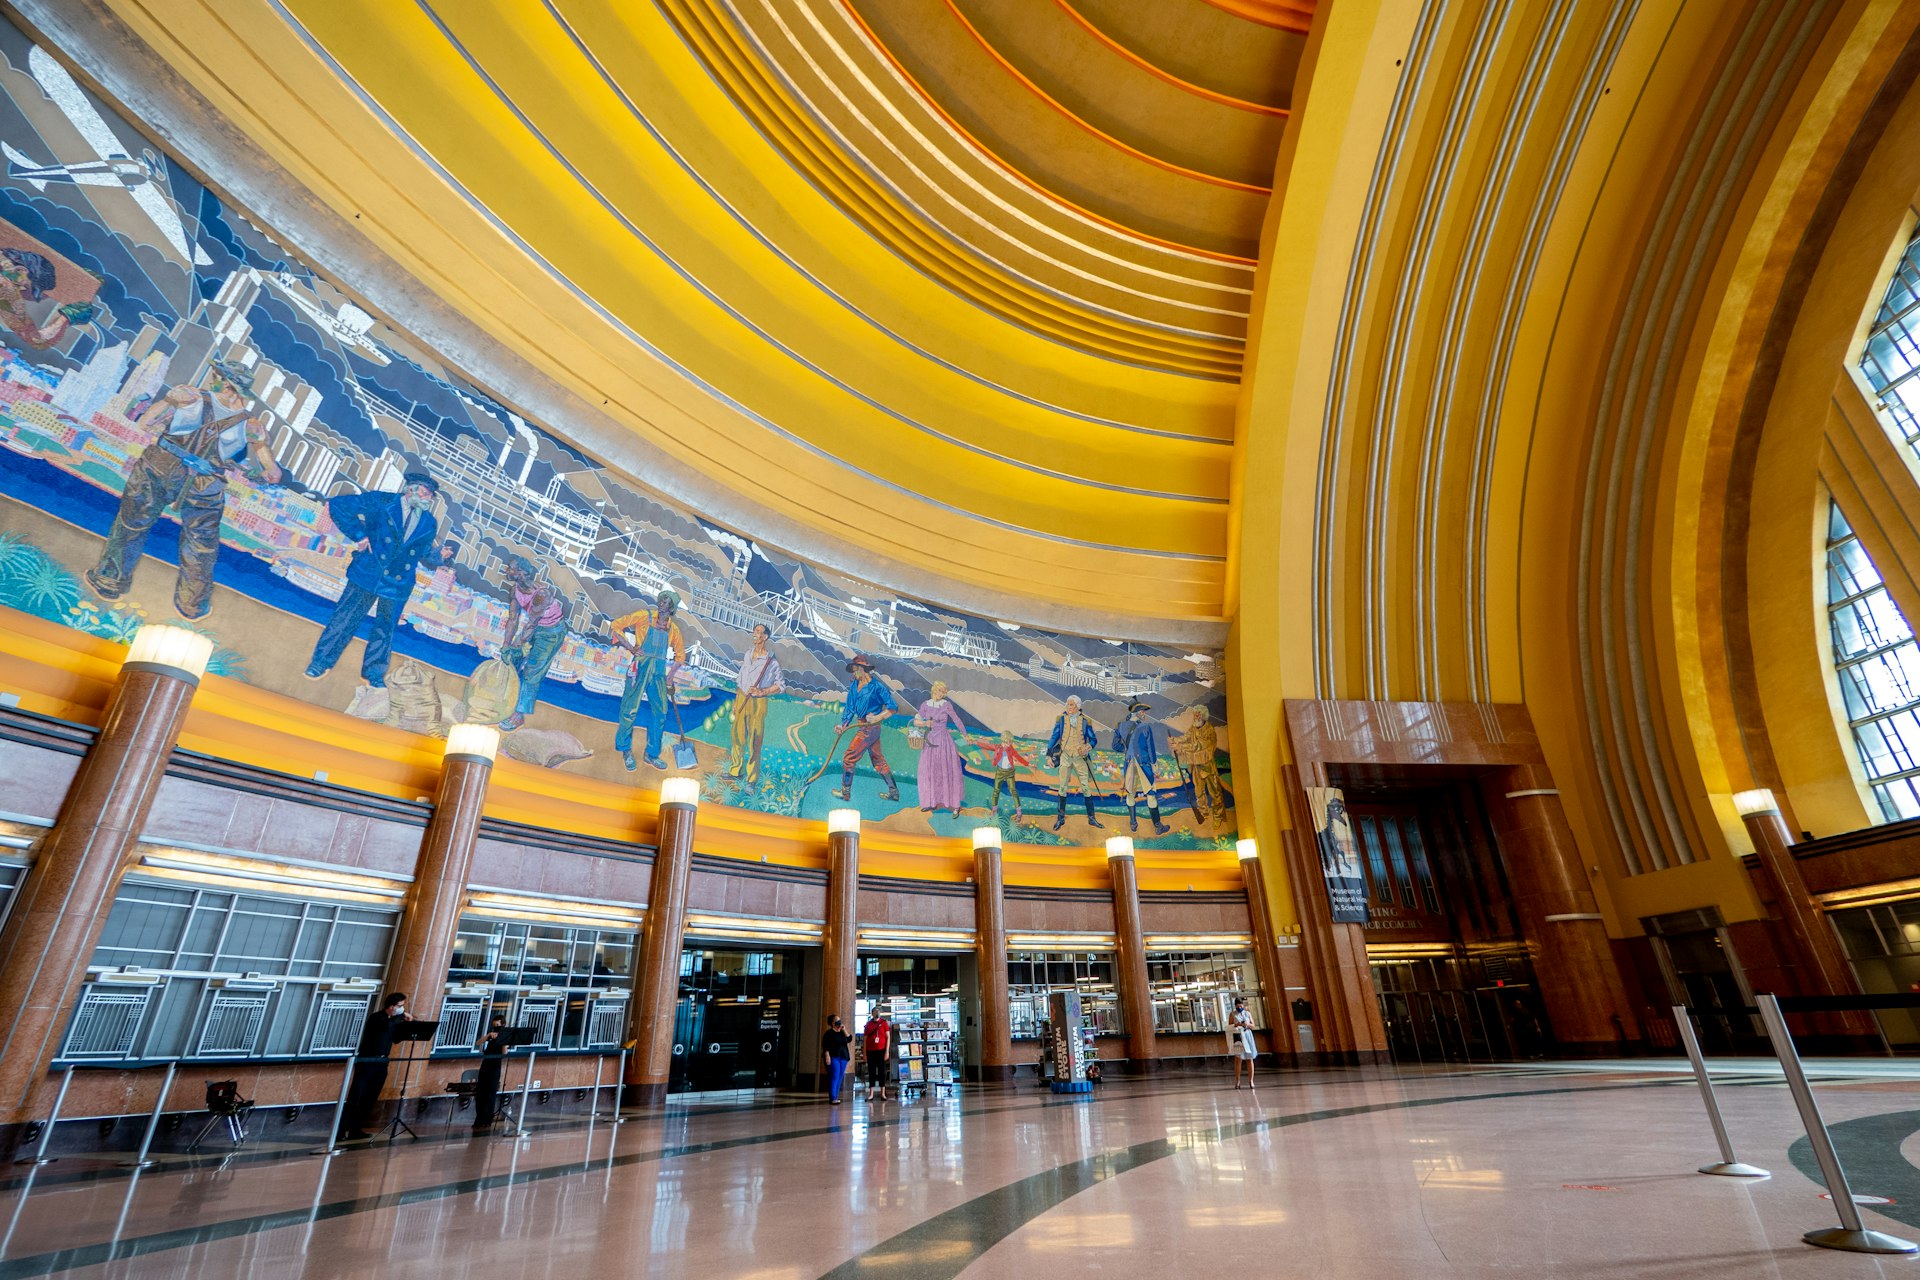 Lobby and murals inside the Cincinnati Museum Center complex